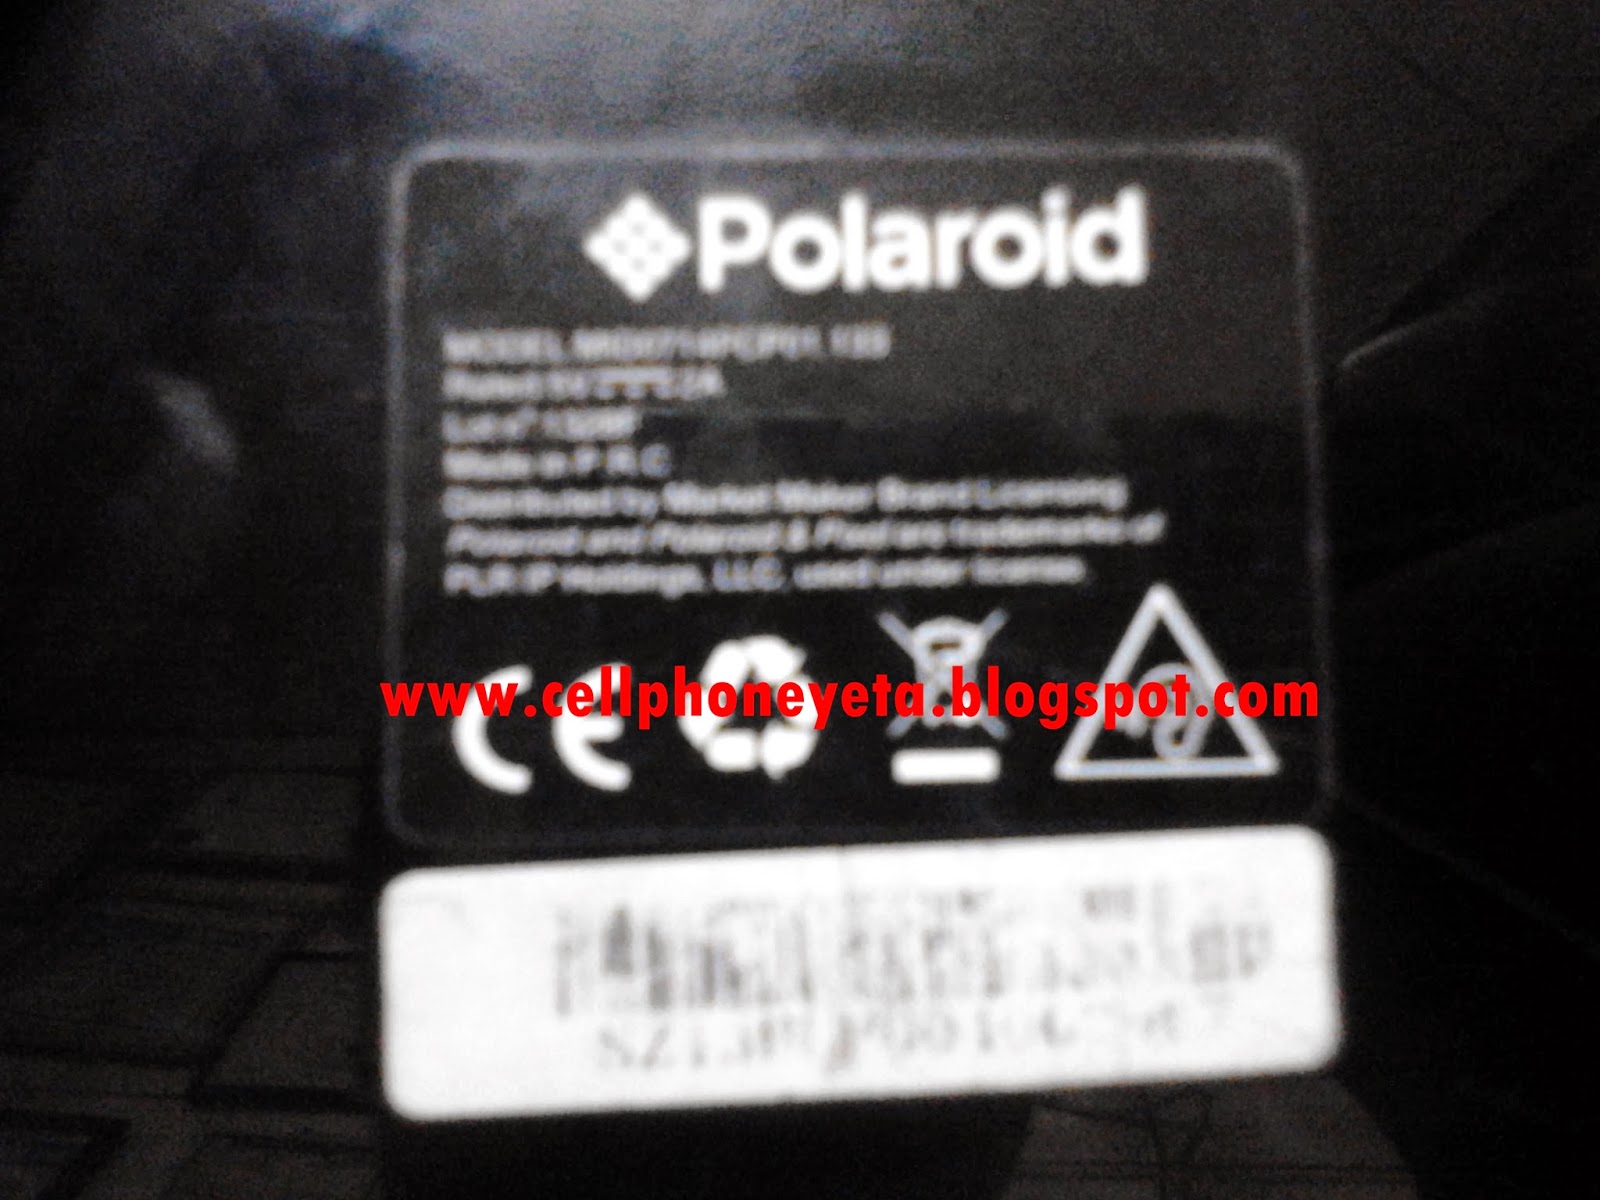 How To Hard Reset Polaroid mid0714pcp01.133 Tablet - Cellphoneyeta